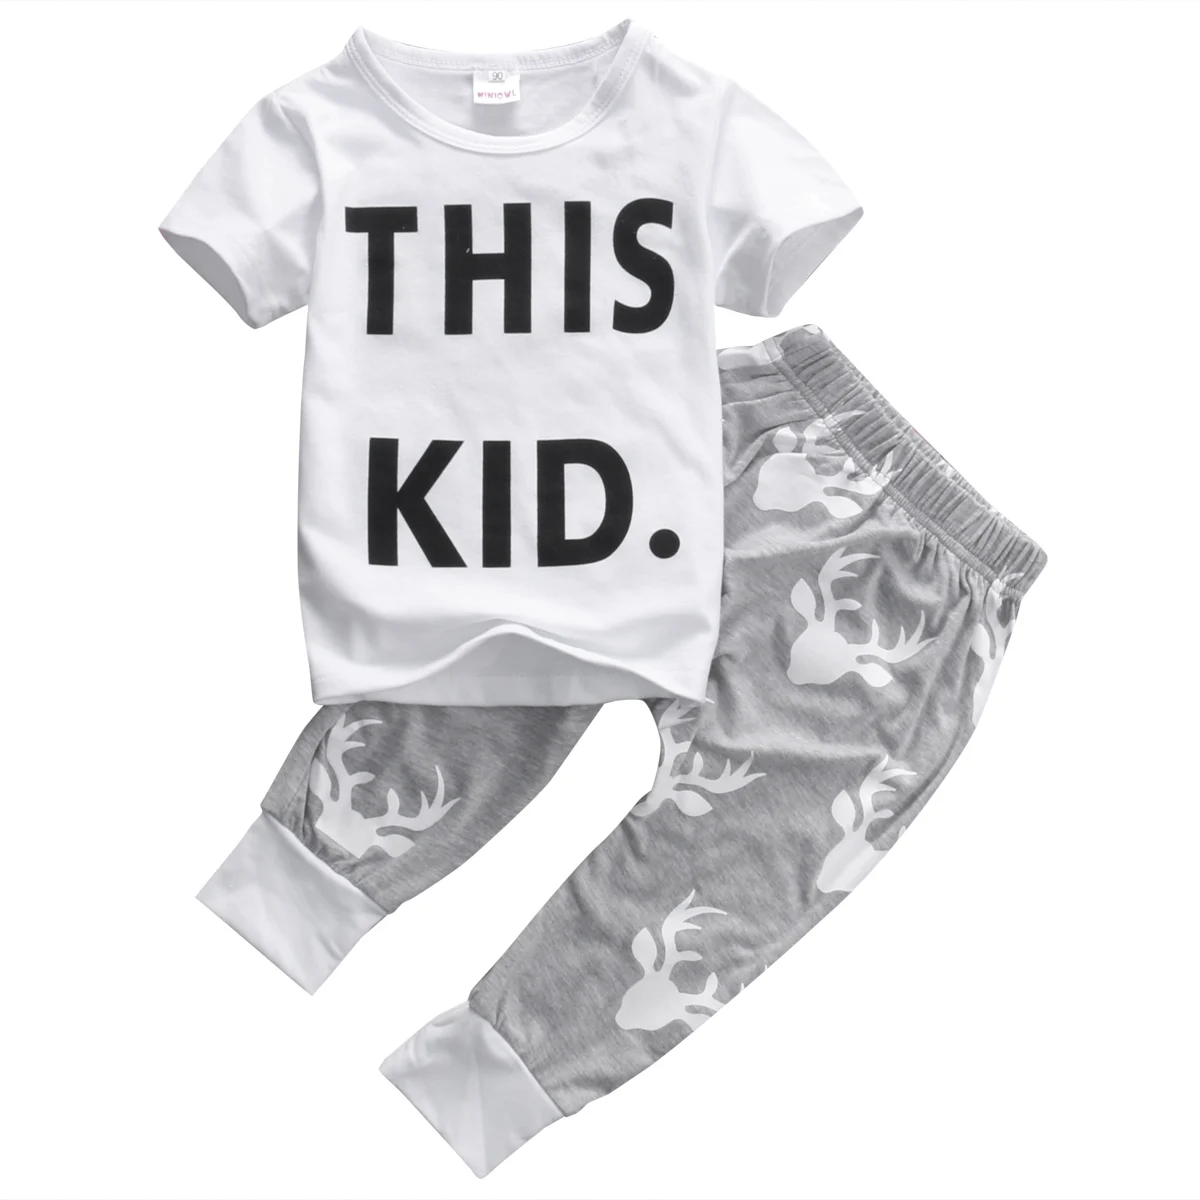 2019 new Toddler Baby Kids Boys Clothes Set T-shirt Tops+Long Pants 2PCS Outfits 0-5T |